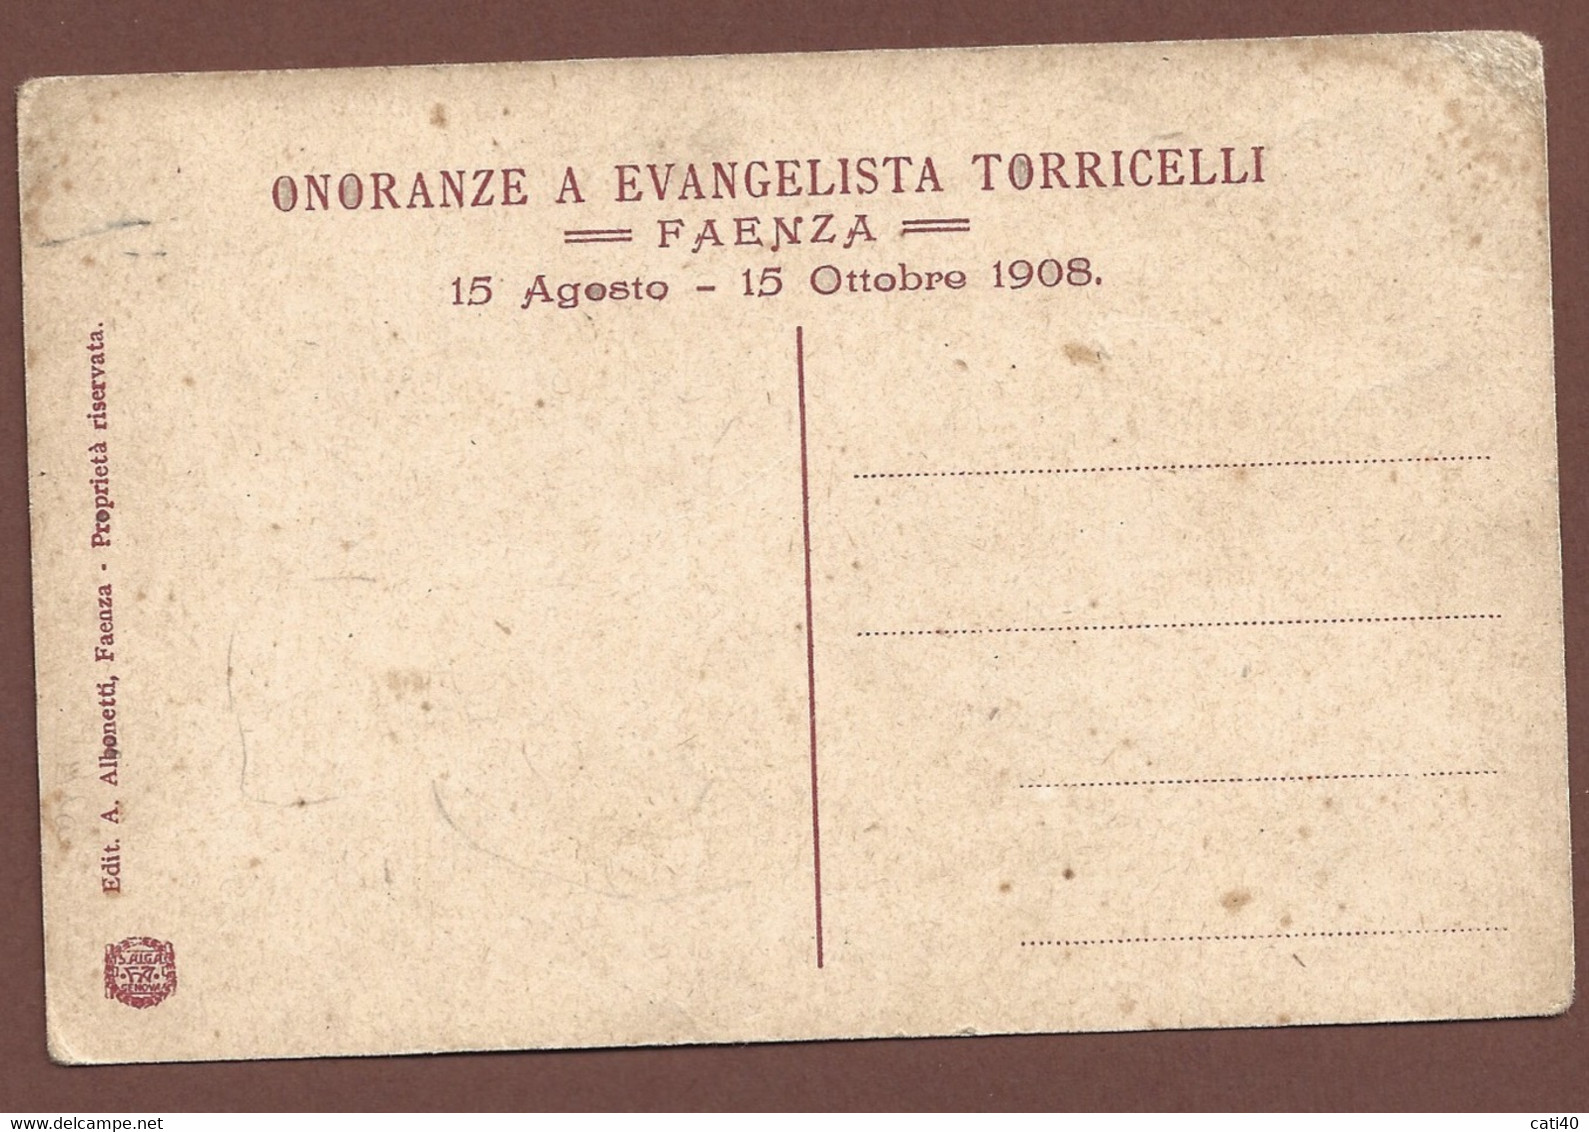 FAENZA - ONORANZE A EVANGELISTA TORRICELLI - AGOSTO - OTTOBRE 1908 - Faenza